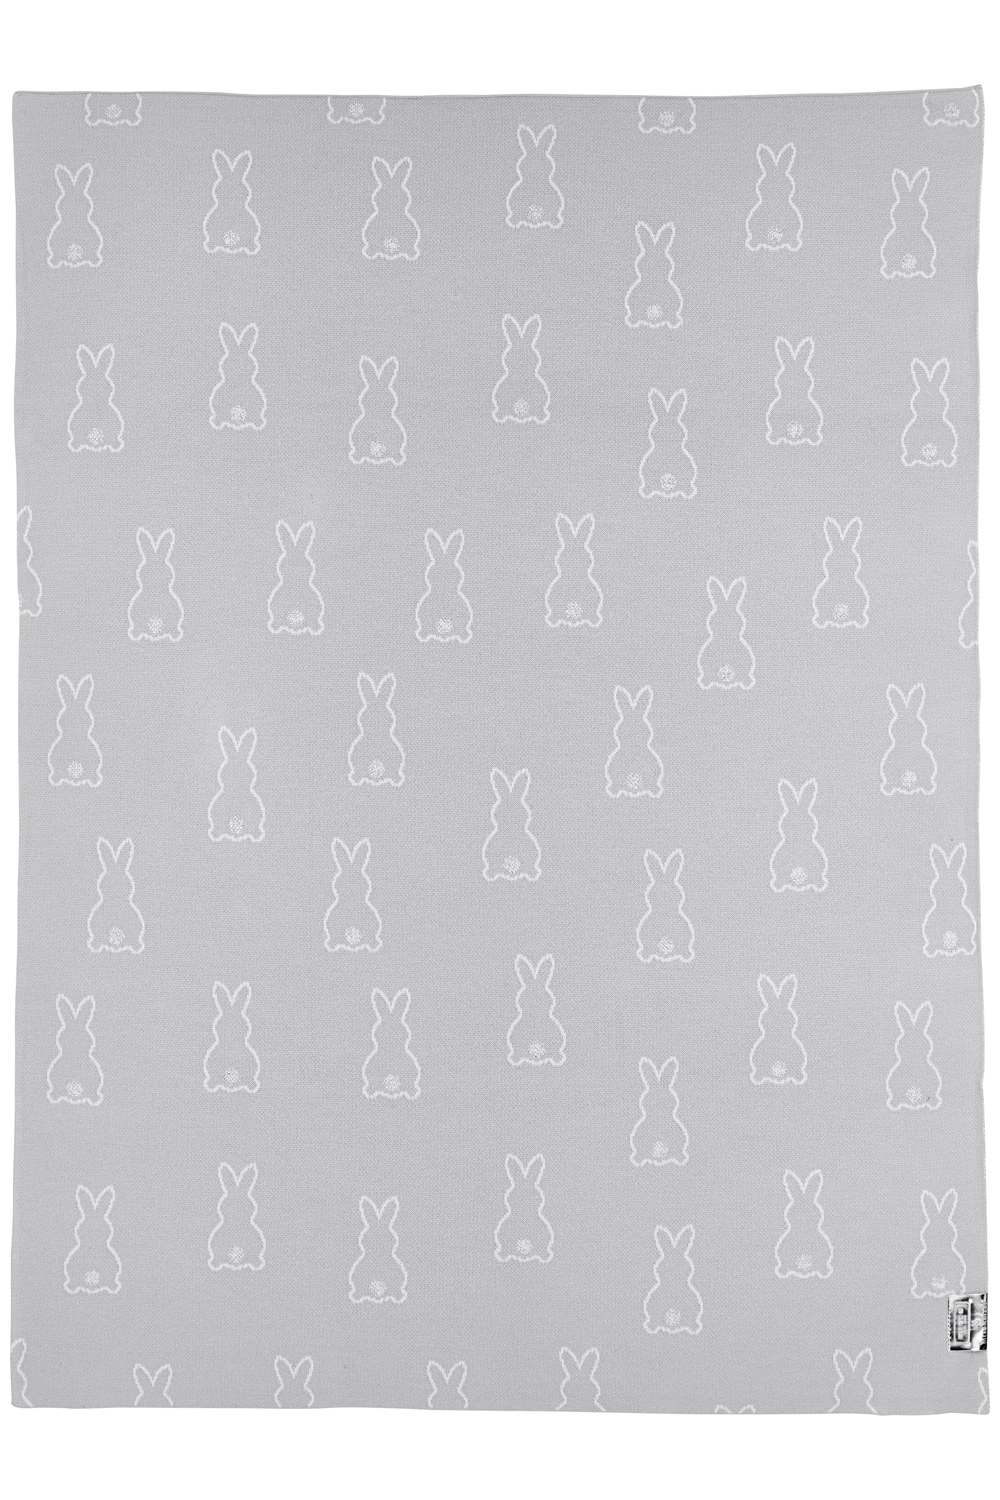 Wiegdeken Rabbit - silver - 75x100cm